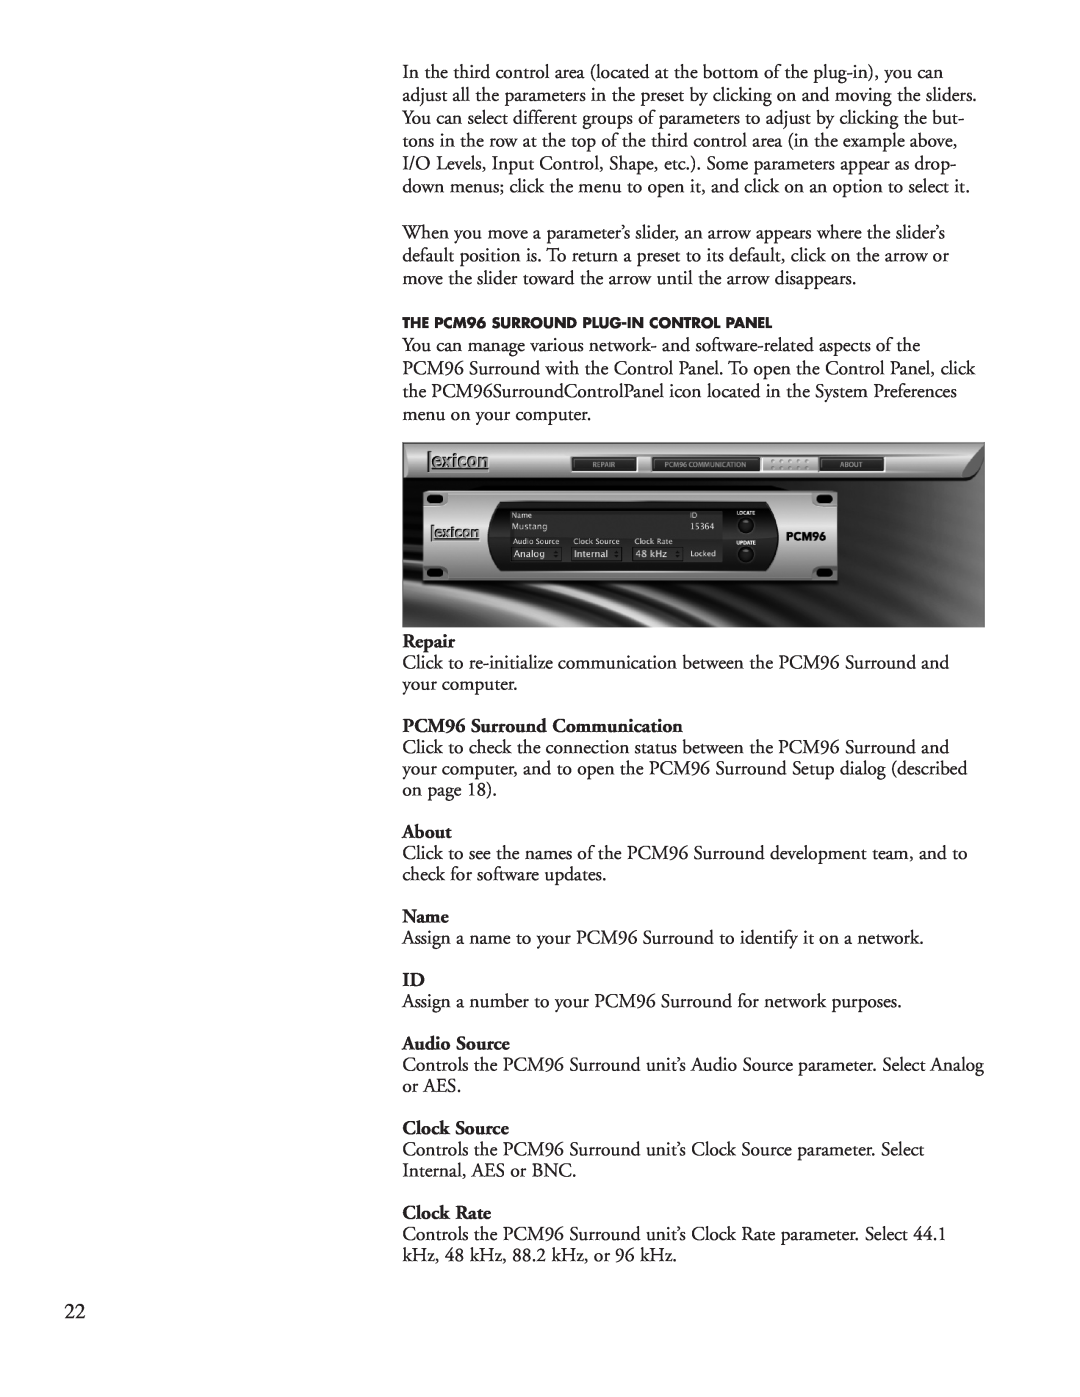 Lexicon manual Repair, PCM96 Surround Communication, About, Name, Audio Source, Clock Source, Clock Rate 